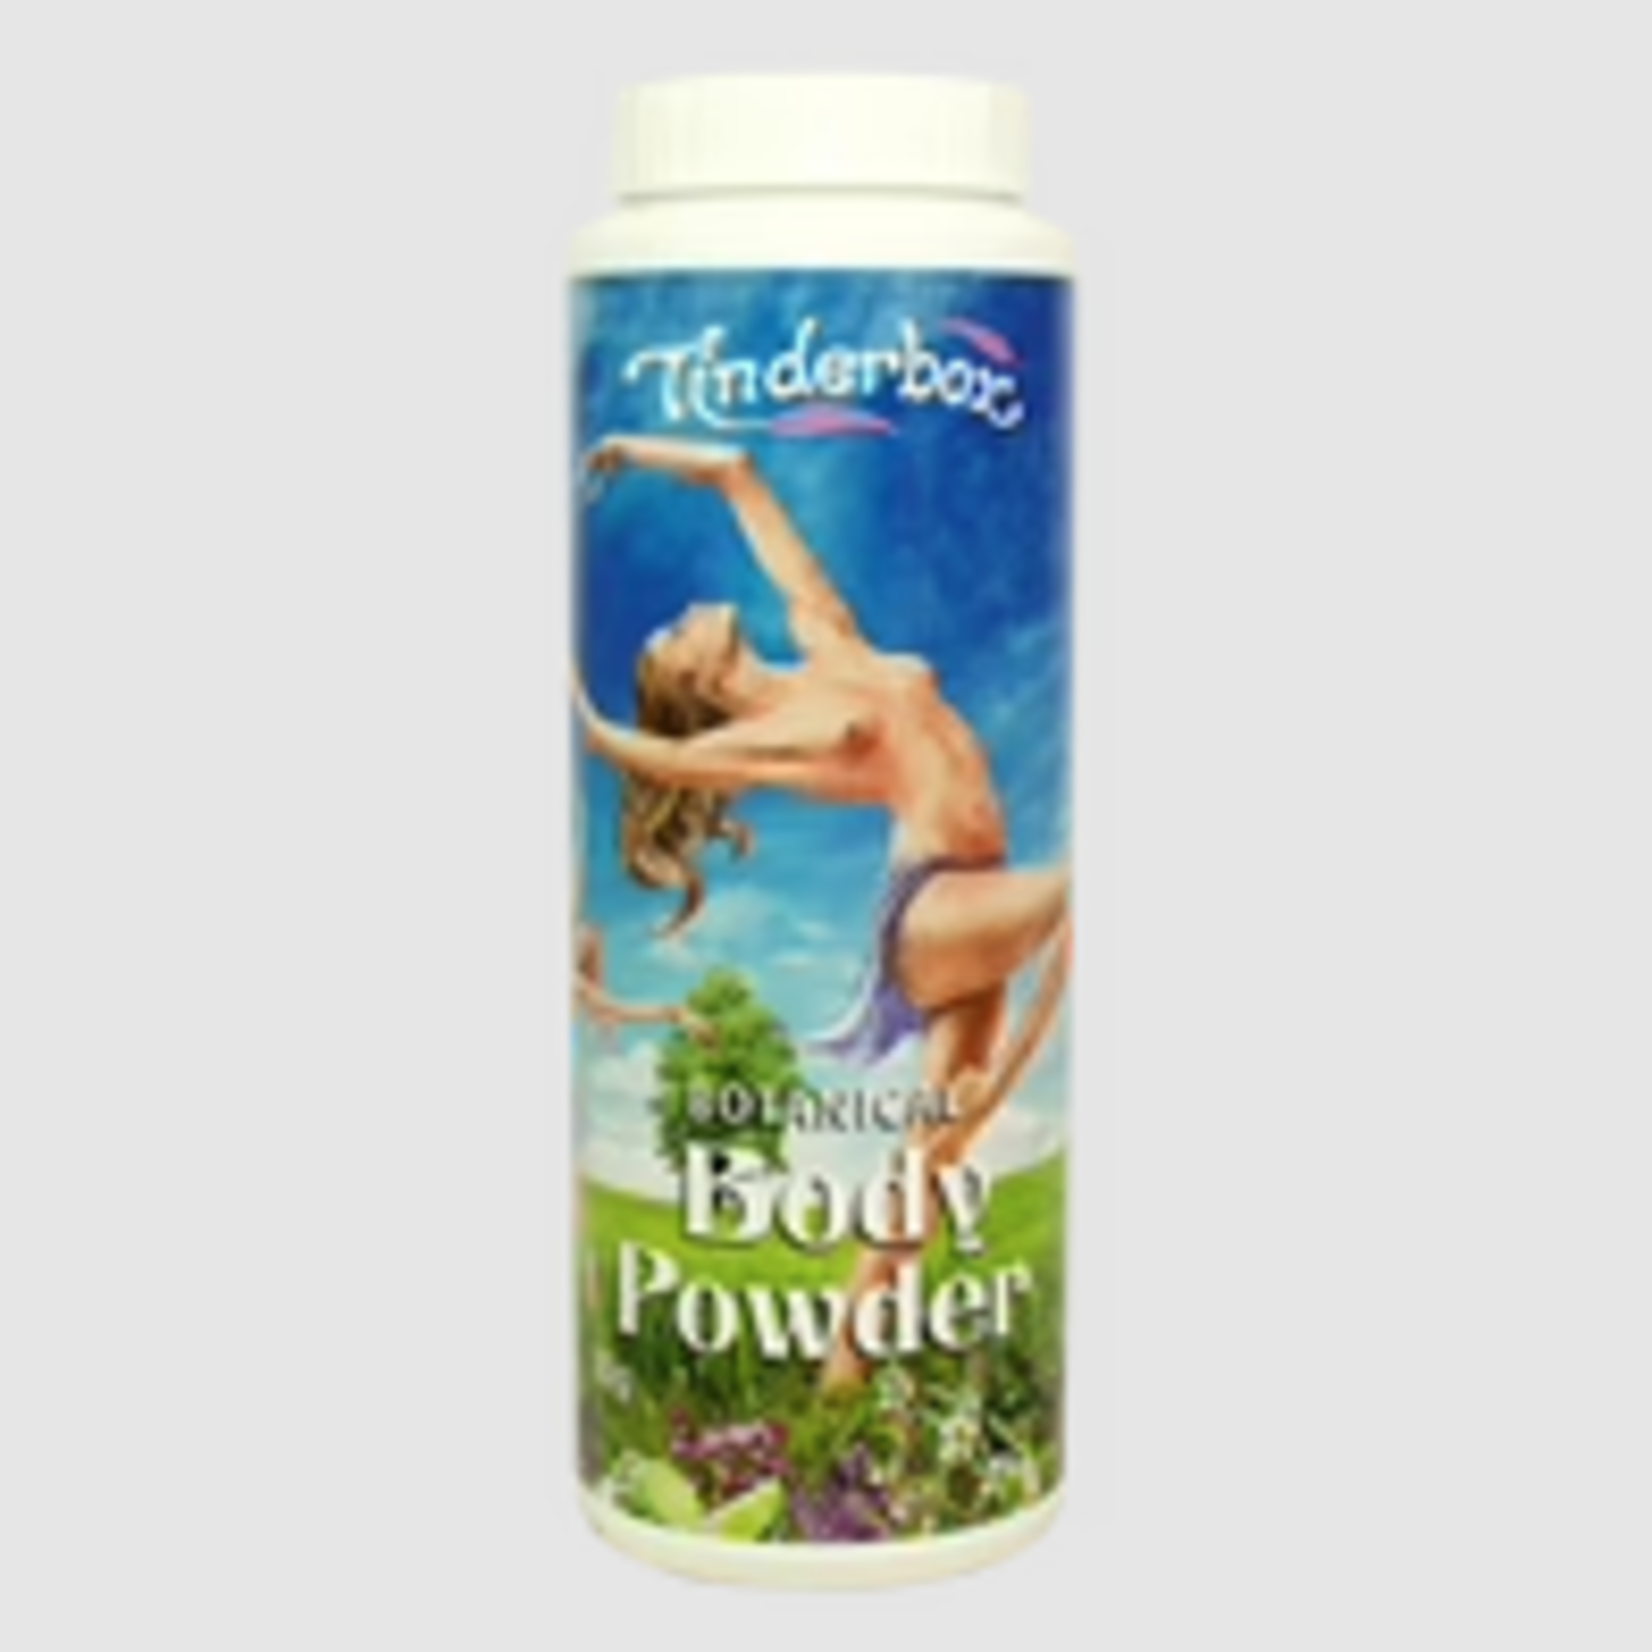 Tinderbox Botanical Body Powder from Tinderbox